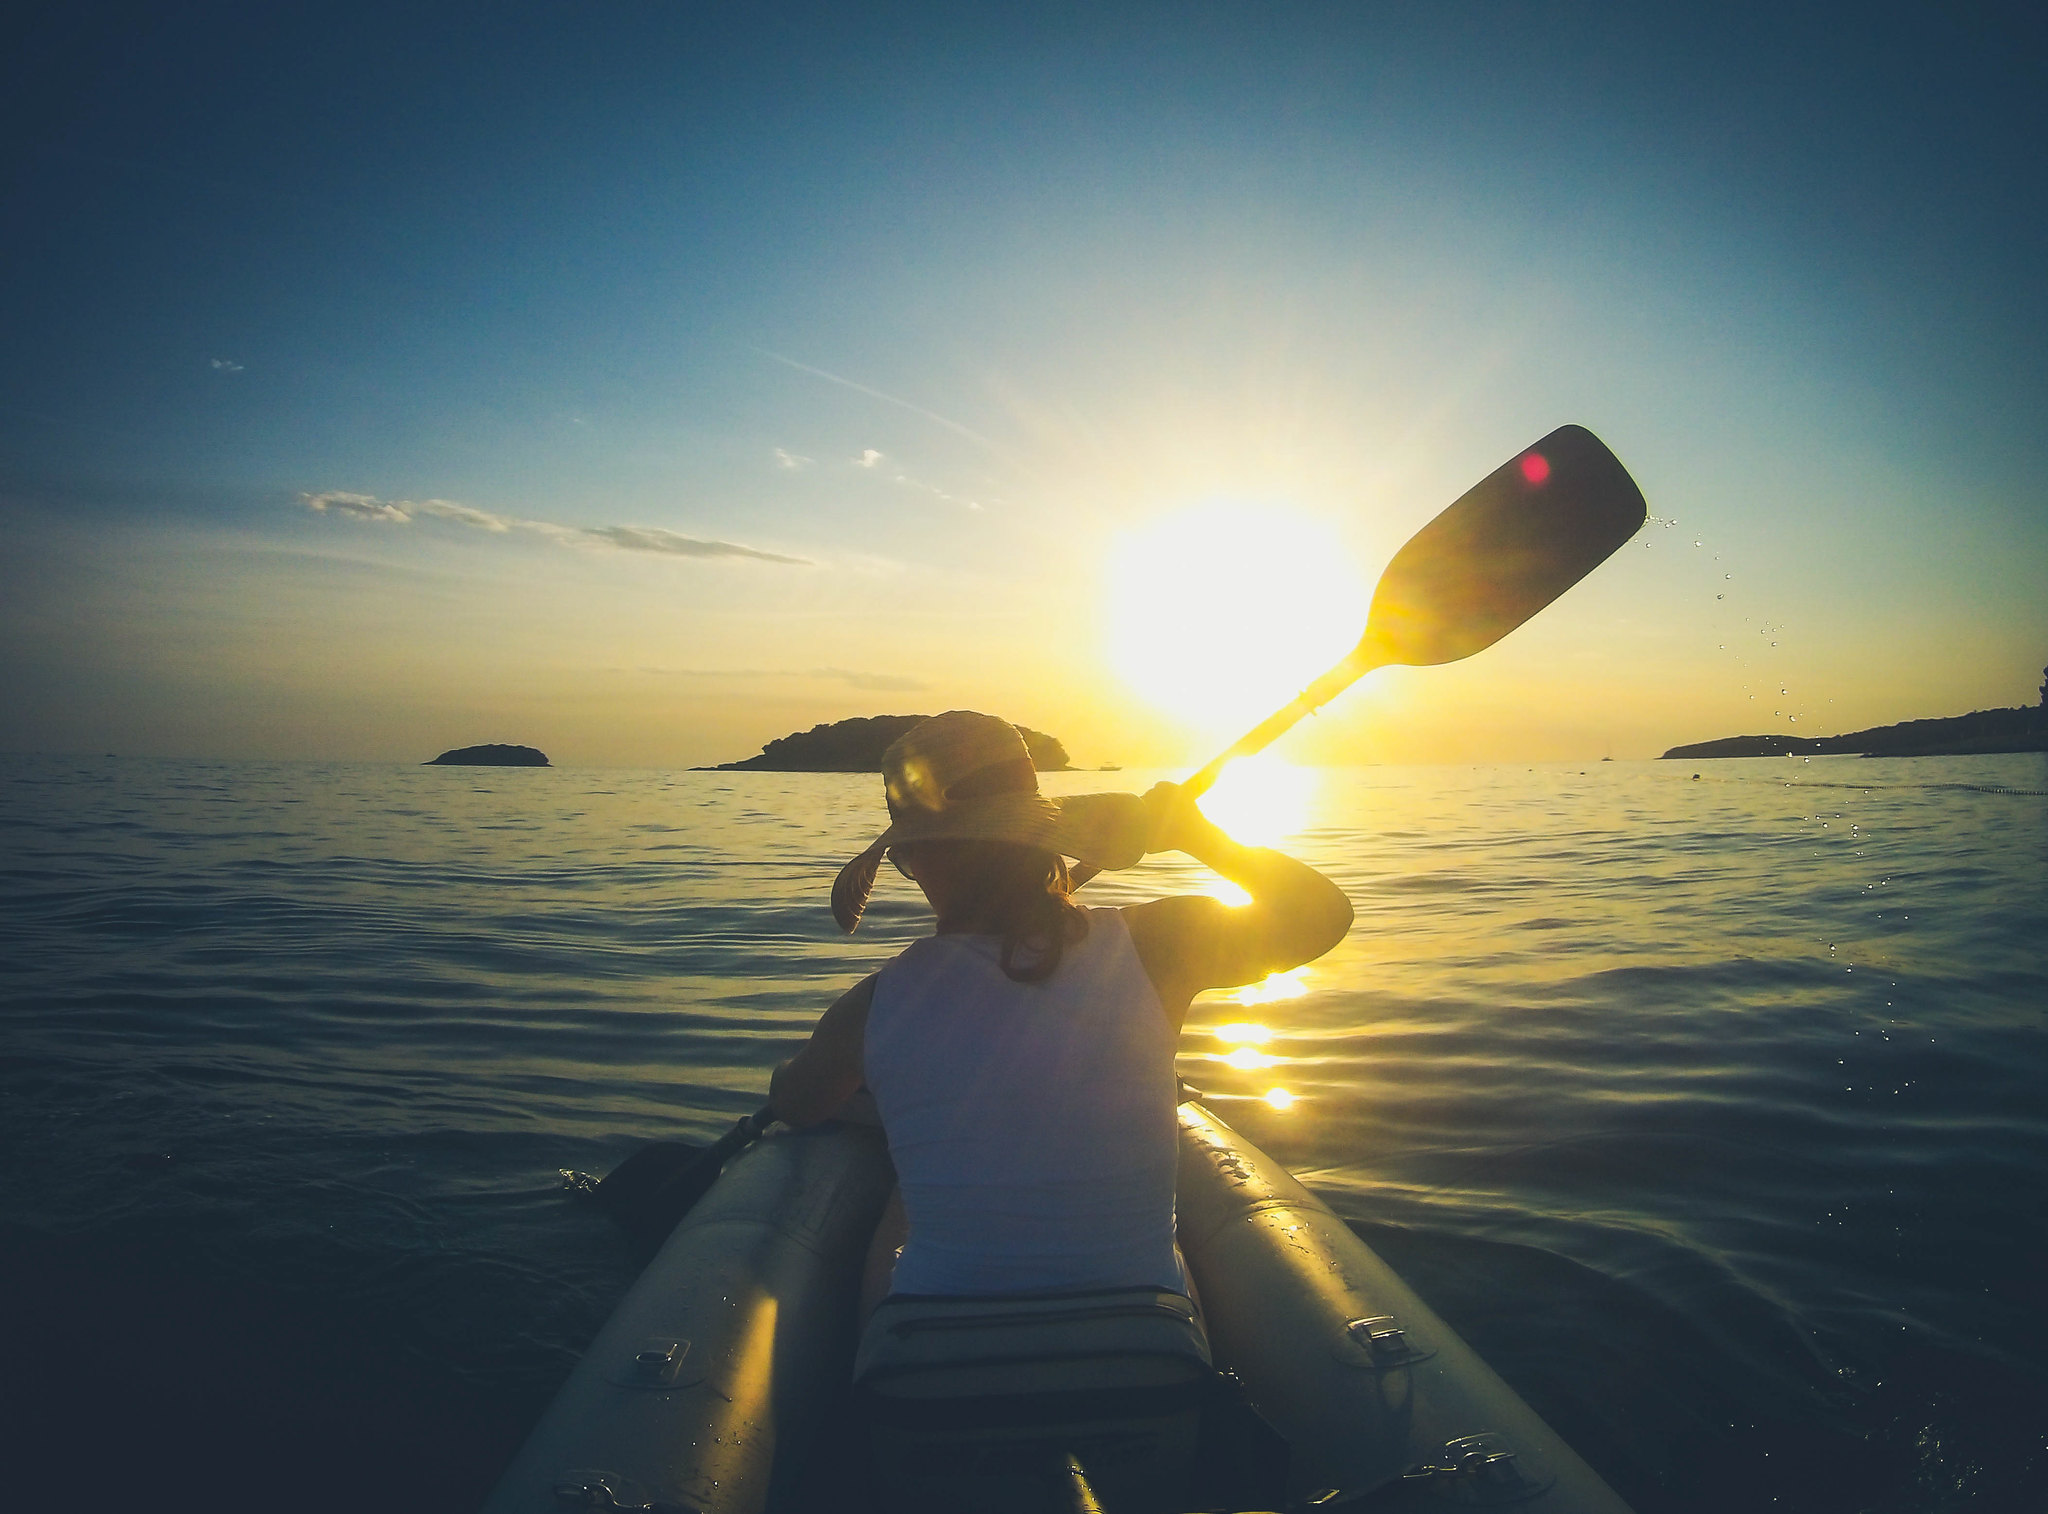 kayaking in croatia during the sunset